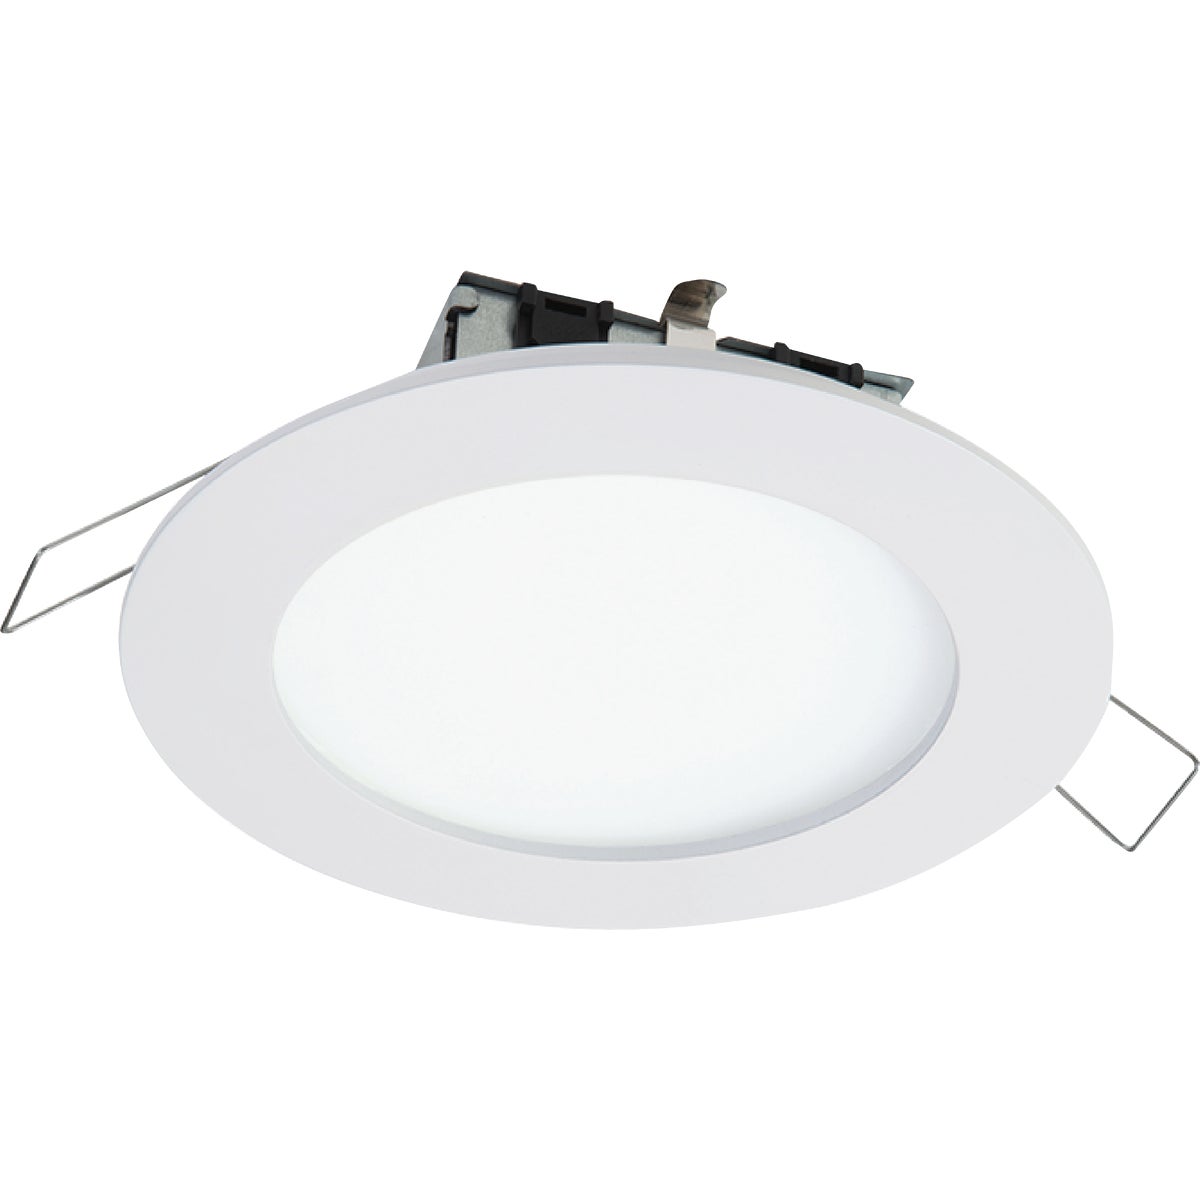 Item 502429, Ultra-low profile, spring clip, round, surface mount LED (light emitting 